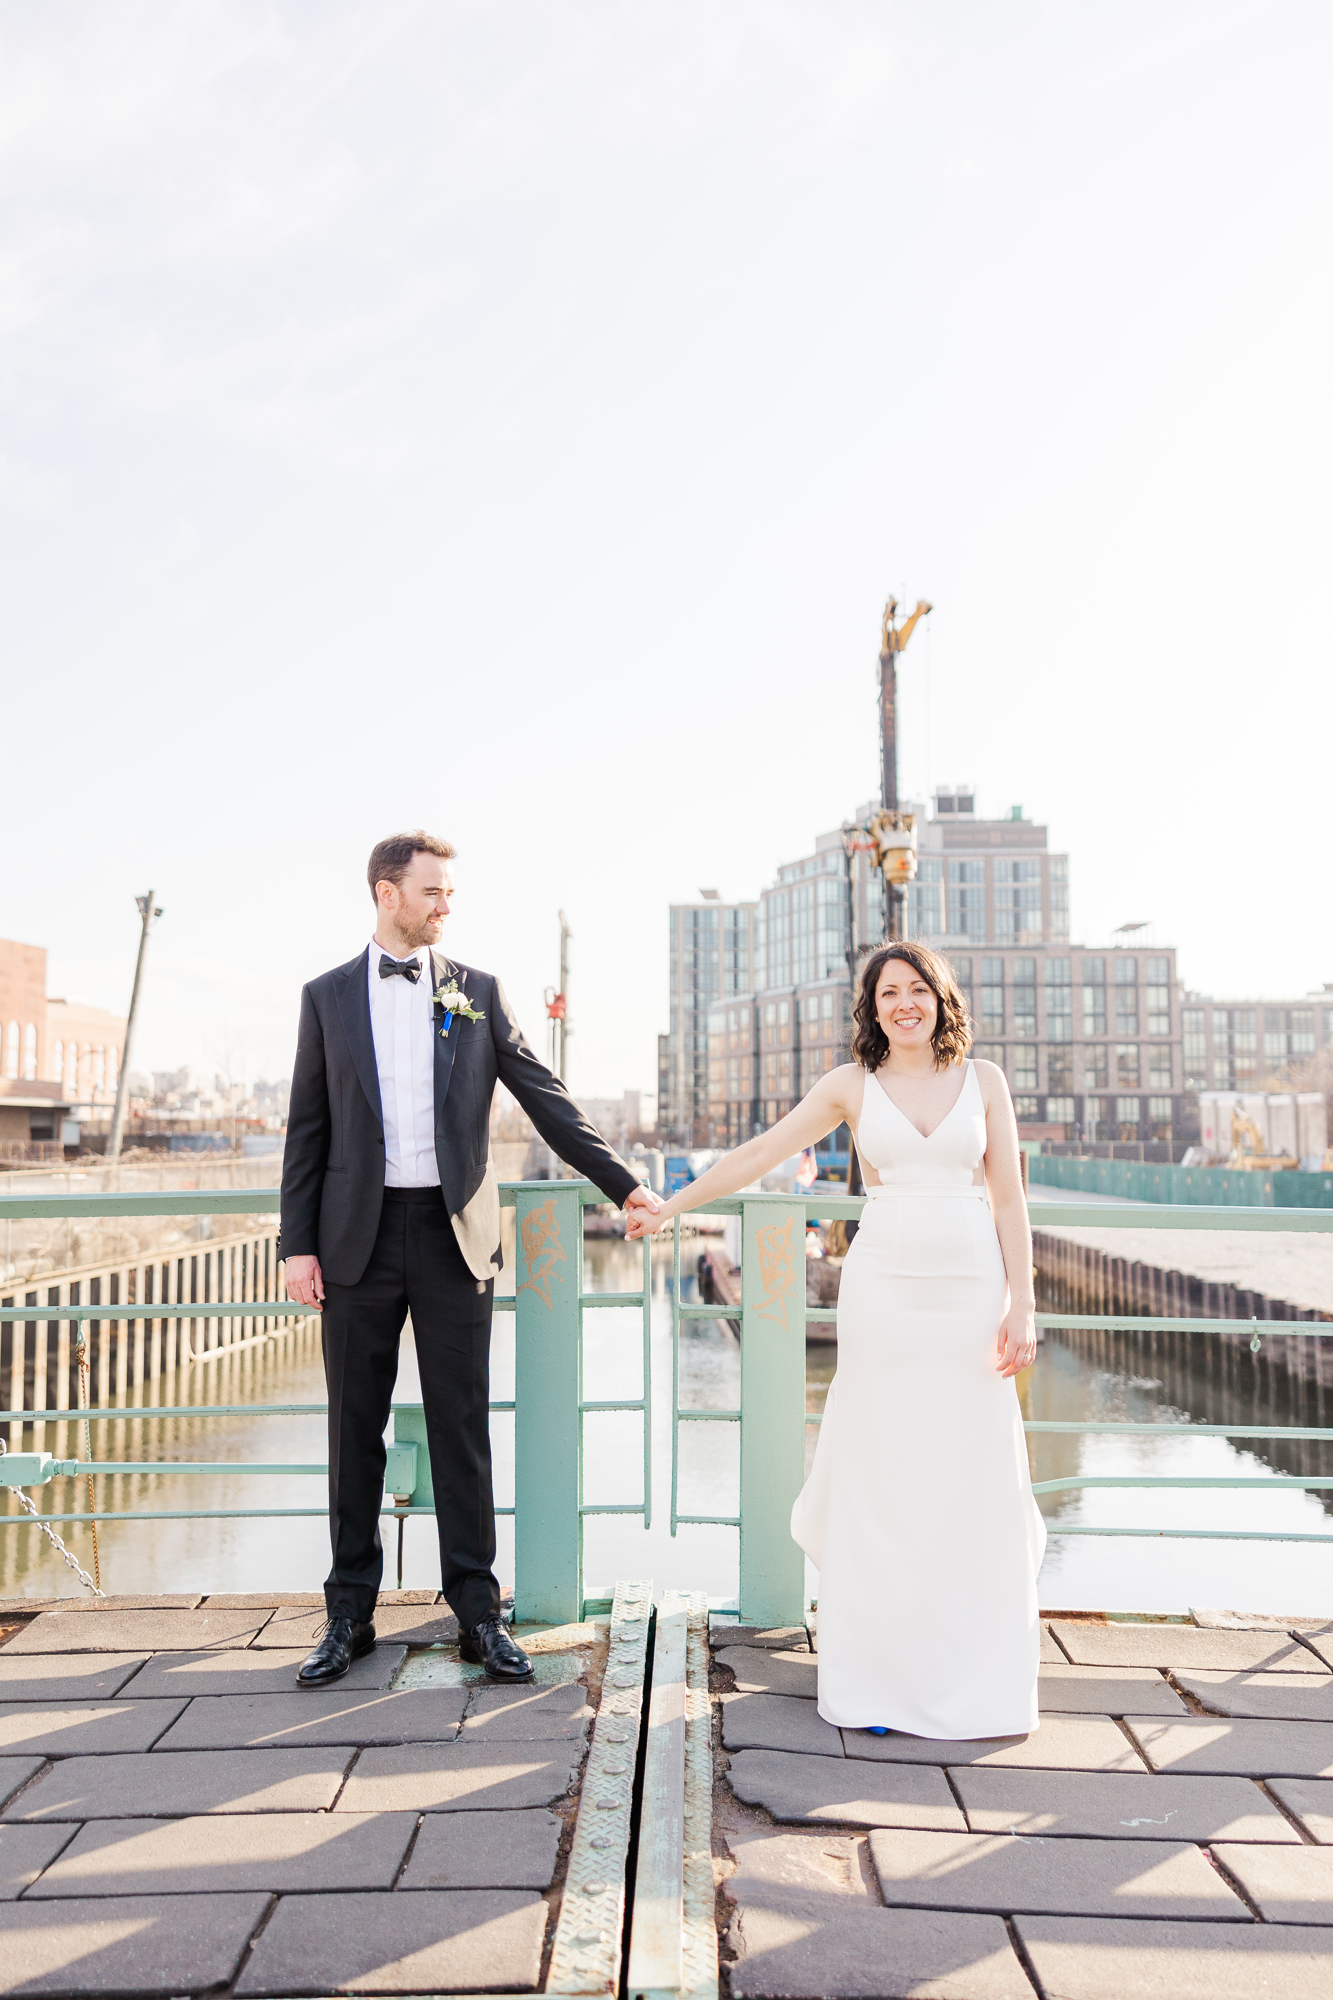 Striking Spring Wedding Photos at The Green Building in Brooklyn NY